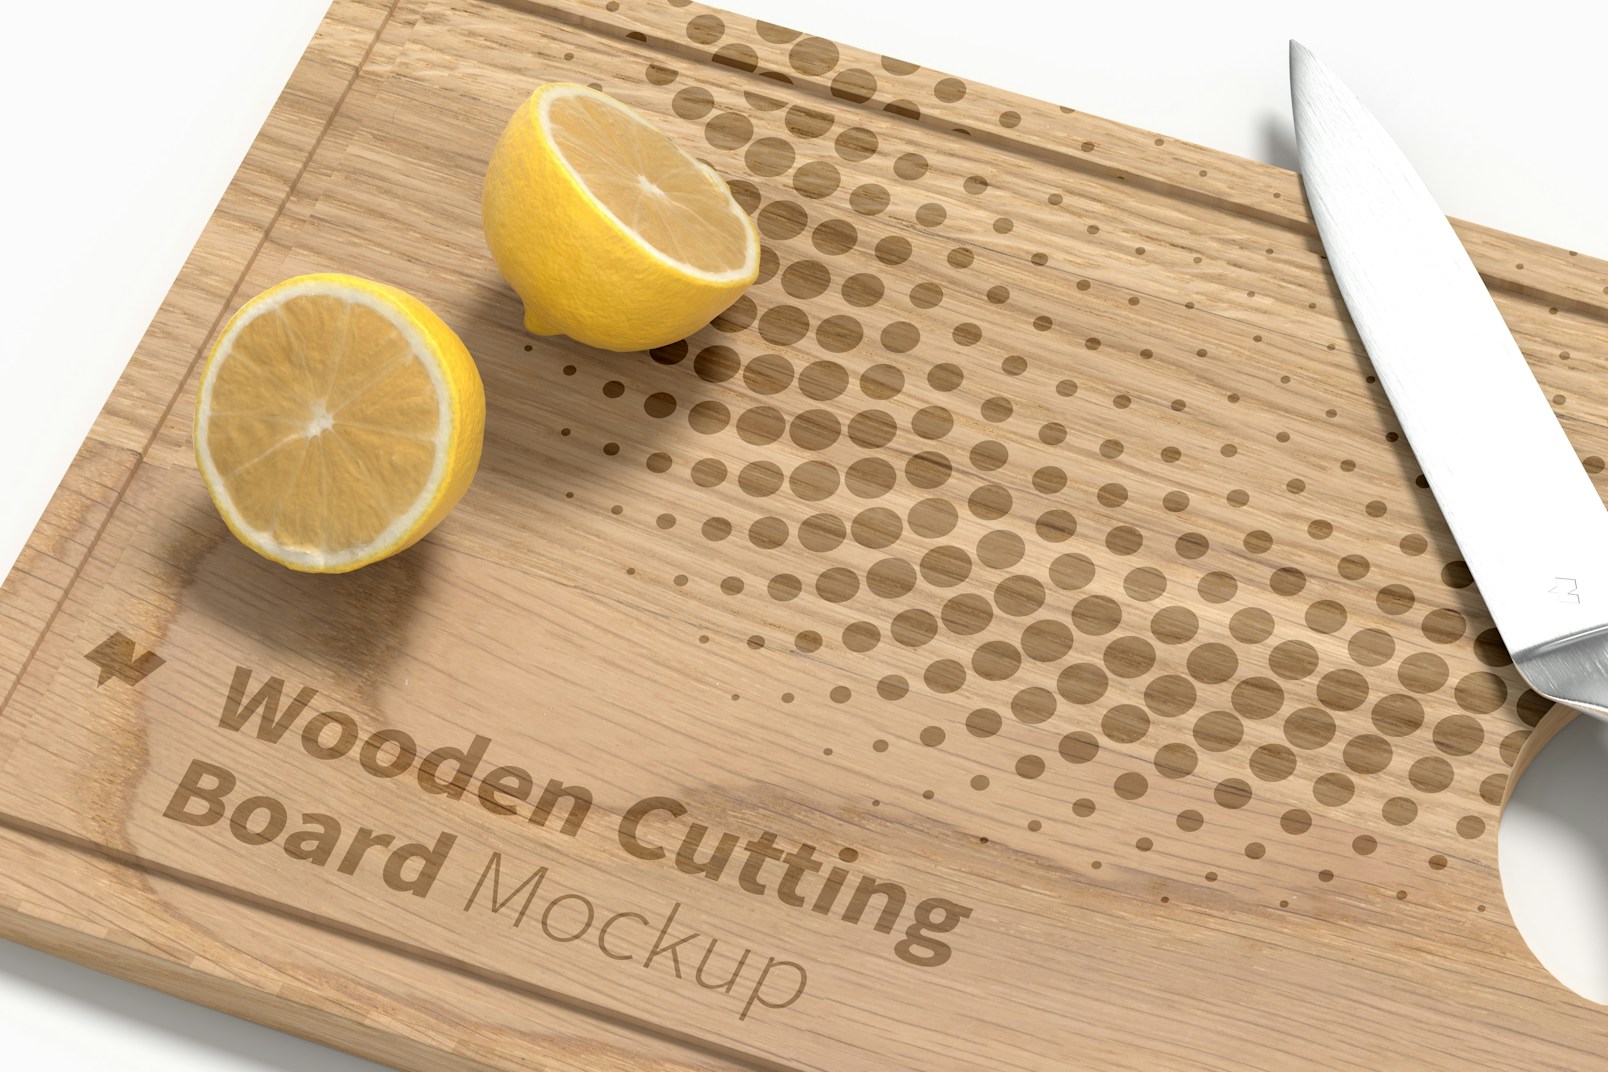 Wooden Cutting Board Mockup, Close Up